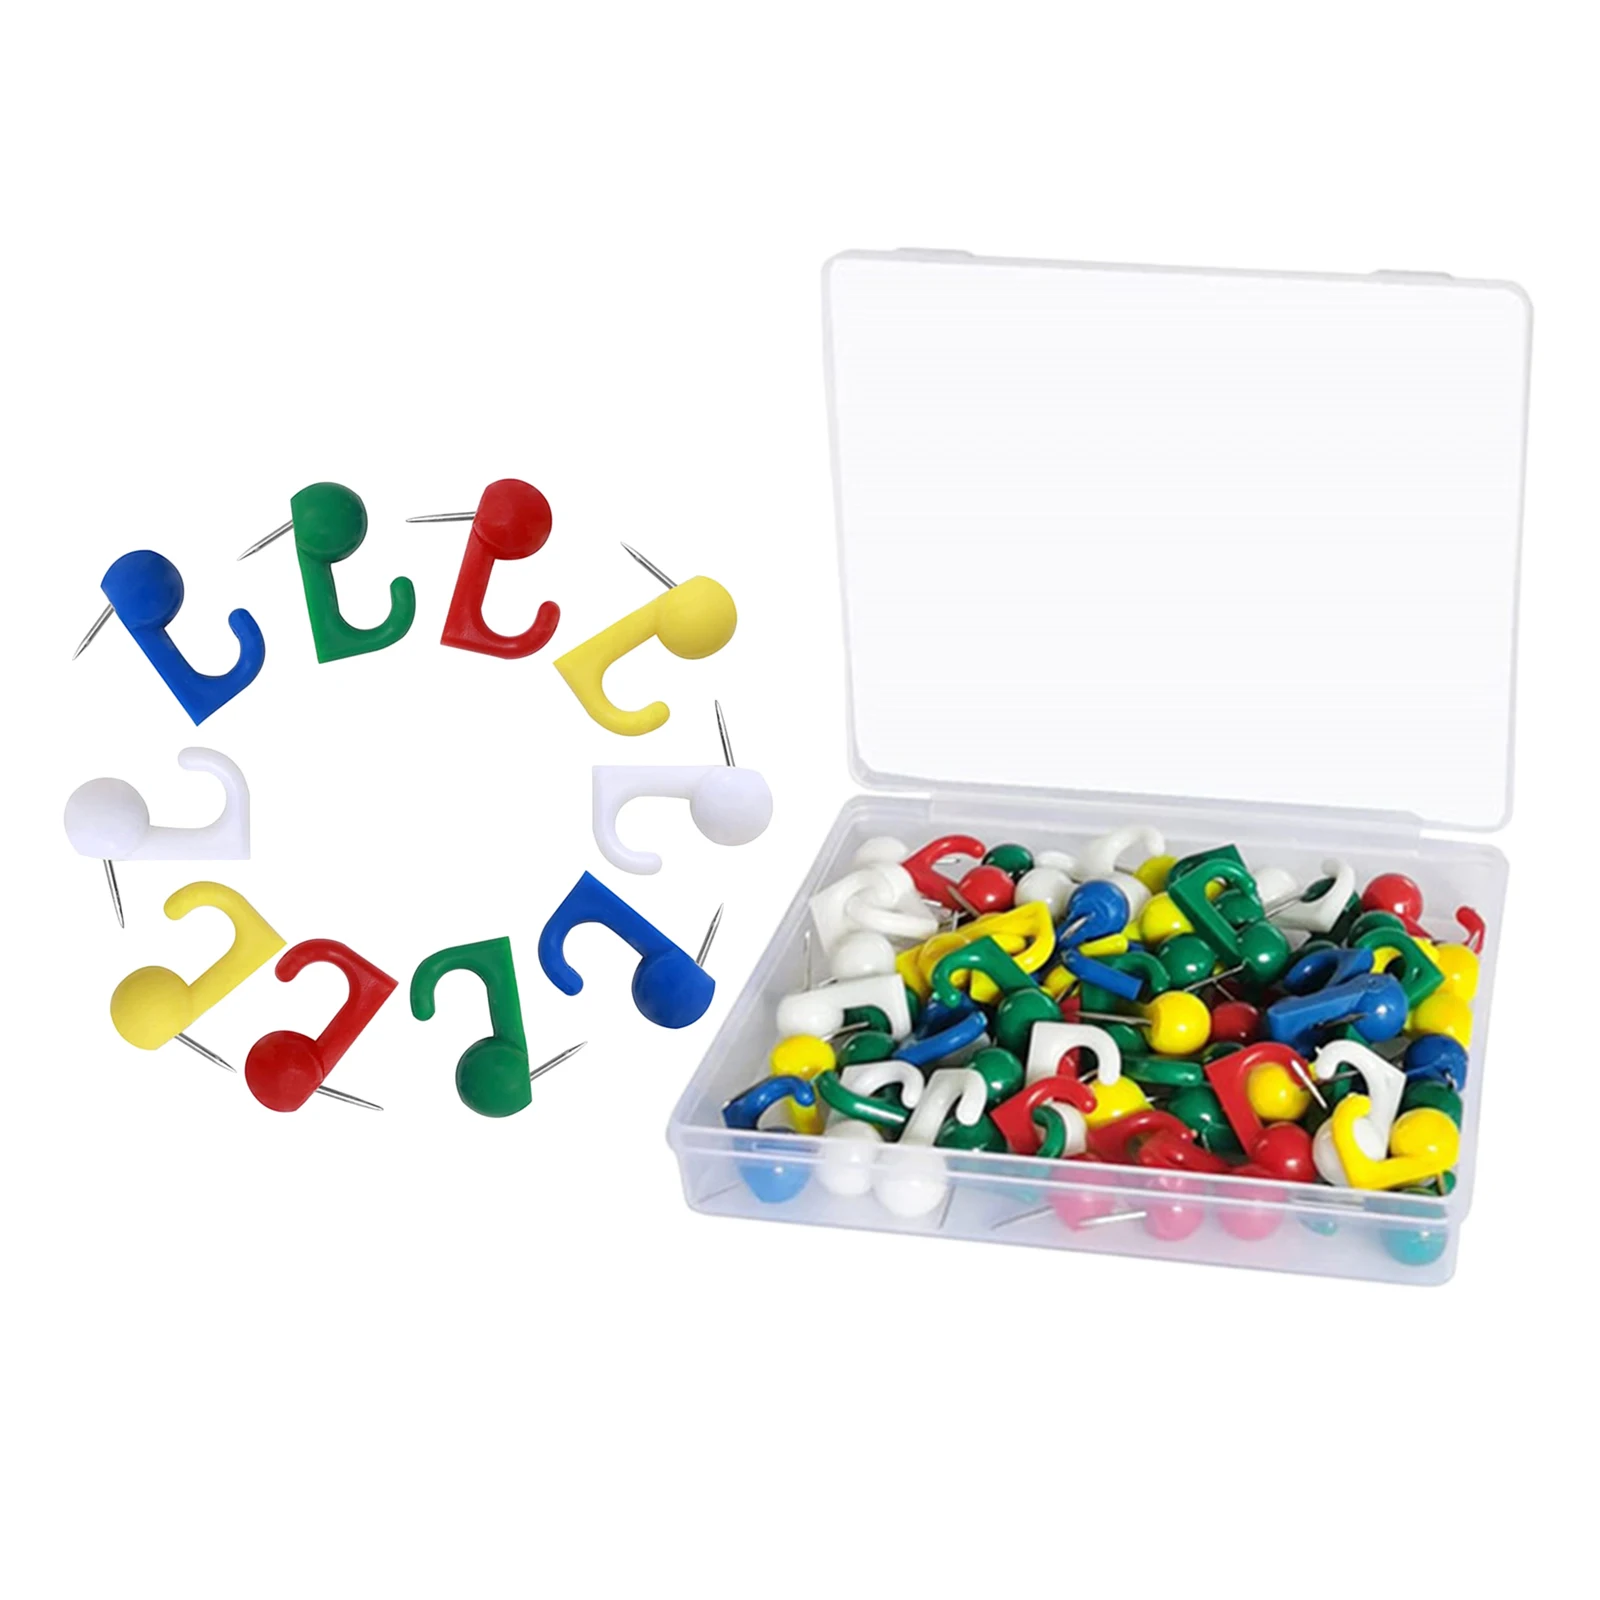 100 Pcs Heads Pin Tacks Decorative Plastic Hooks Thumb Tacks for Cork Board Supplies School Christmas Decorations